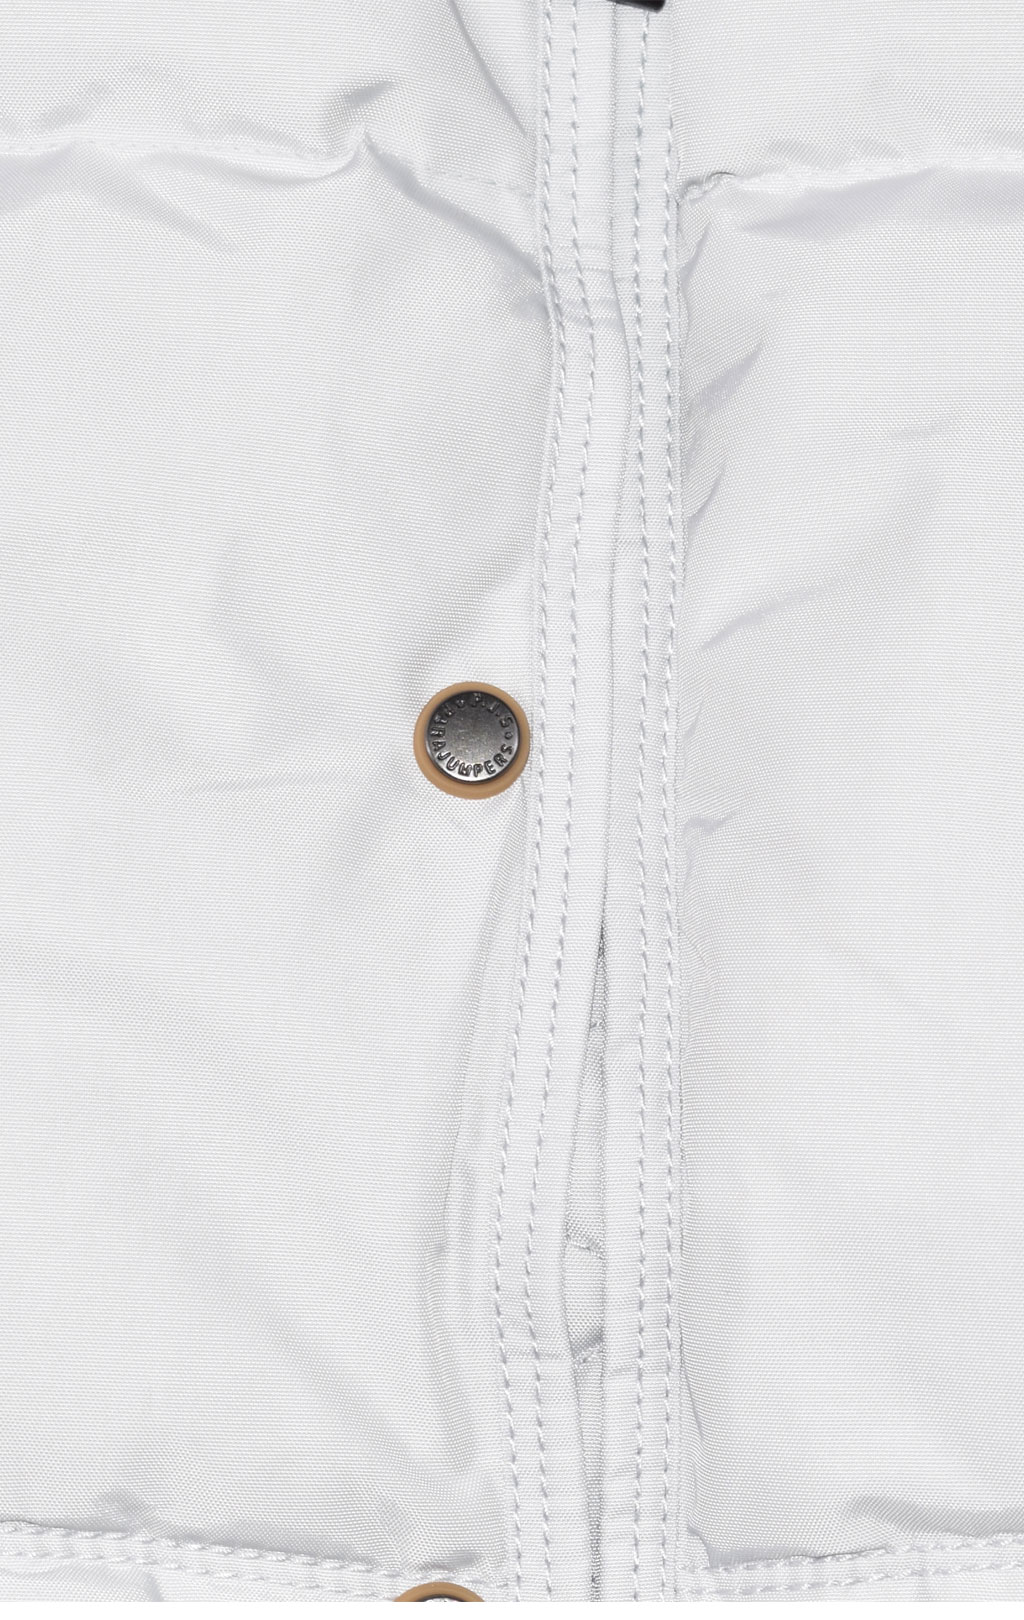 Женская куртка-пуховик PARAJUMPERS LONG BEAR FW 21/22 mist white 